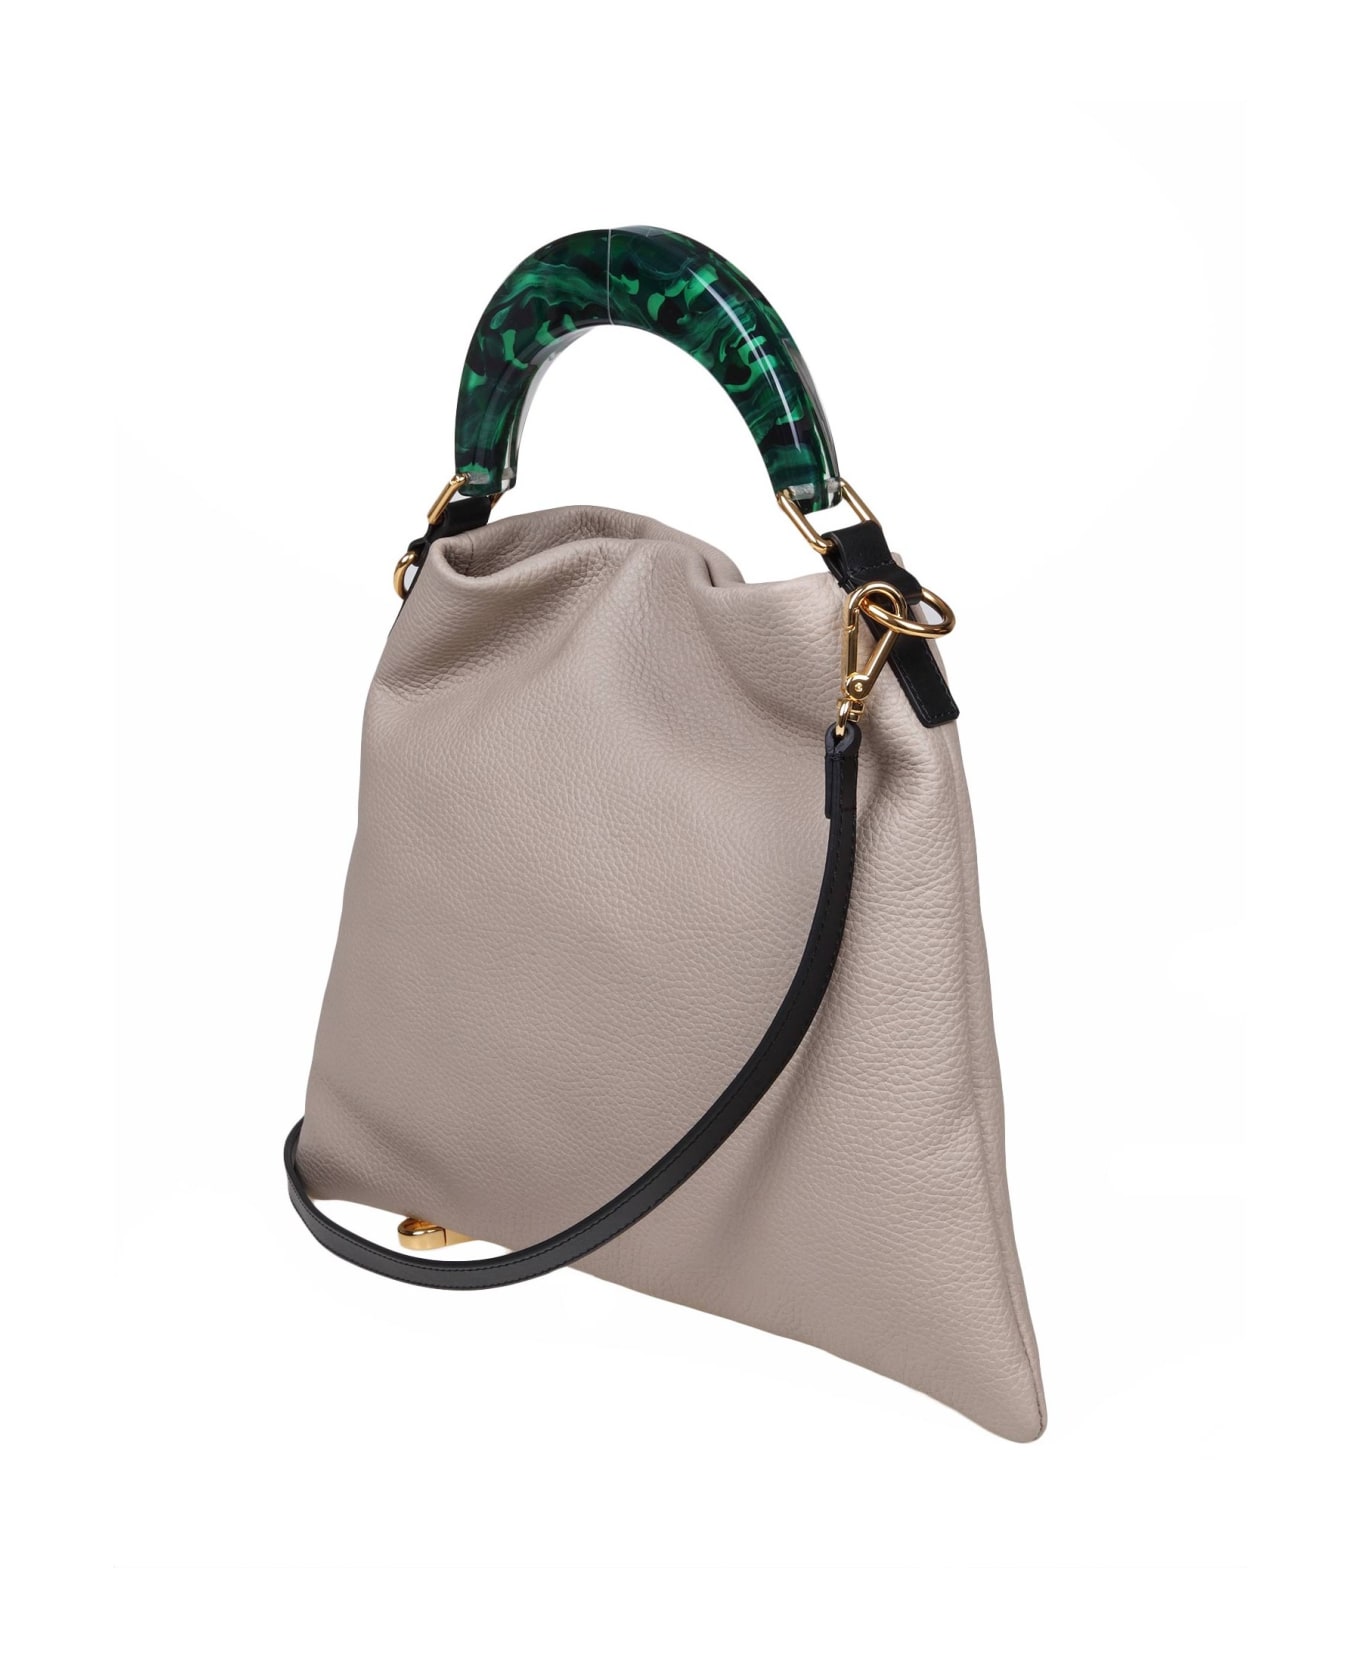 Marni Small 'patent Leather' Hobo Bag - Camel